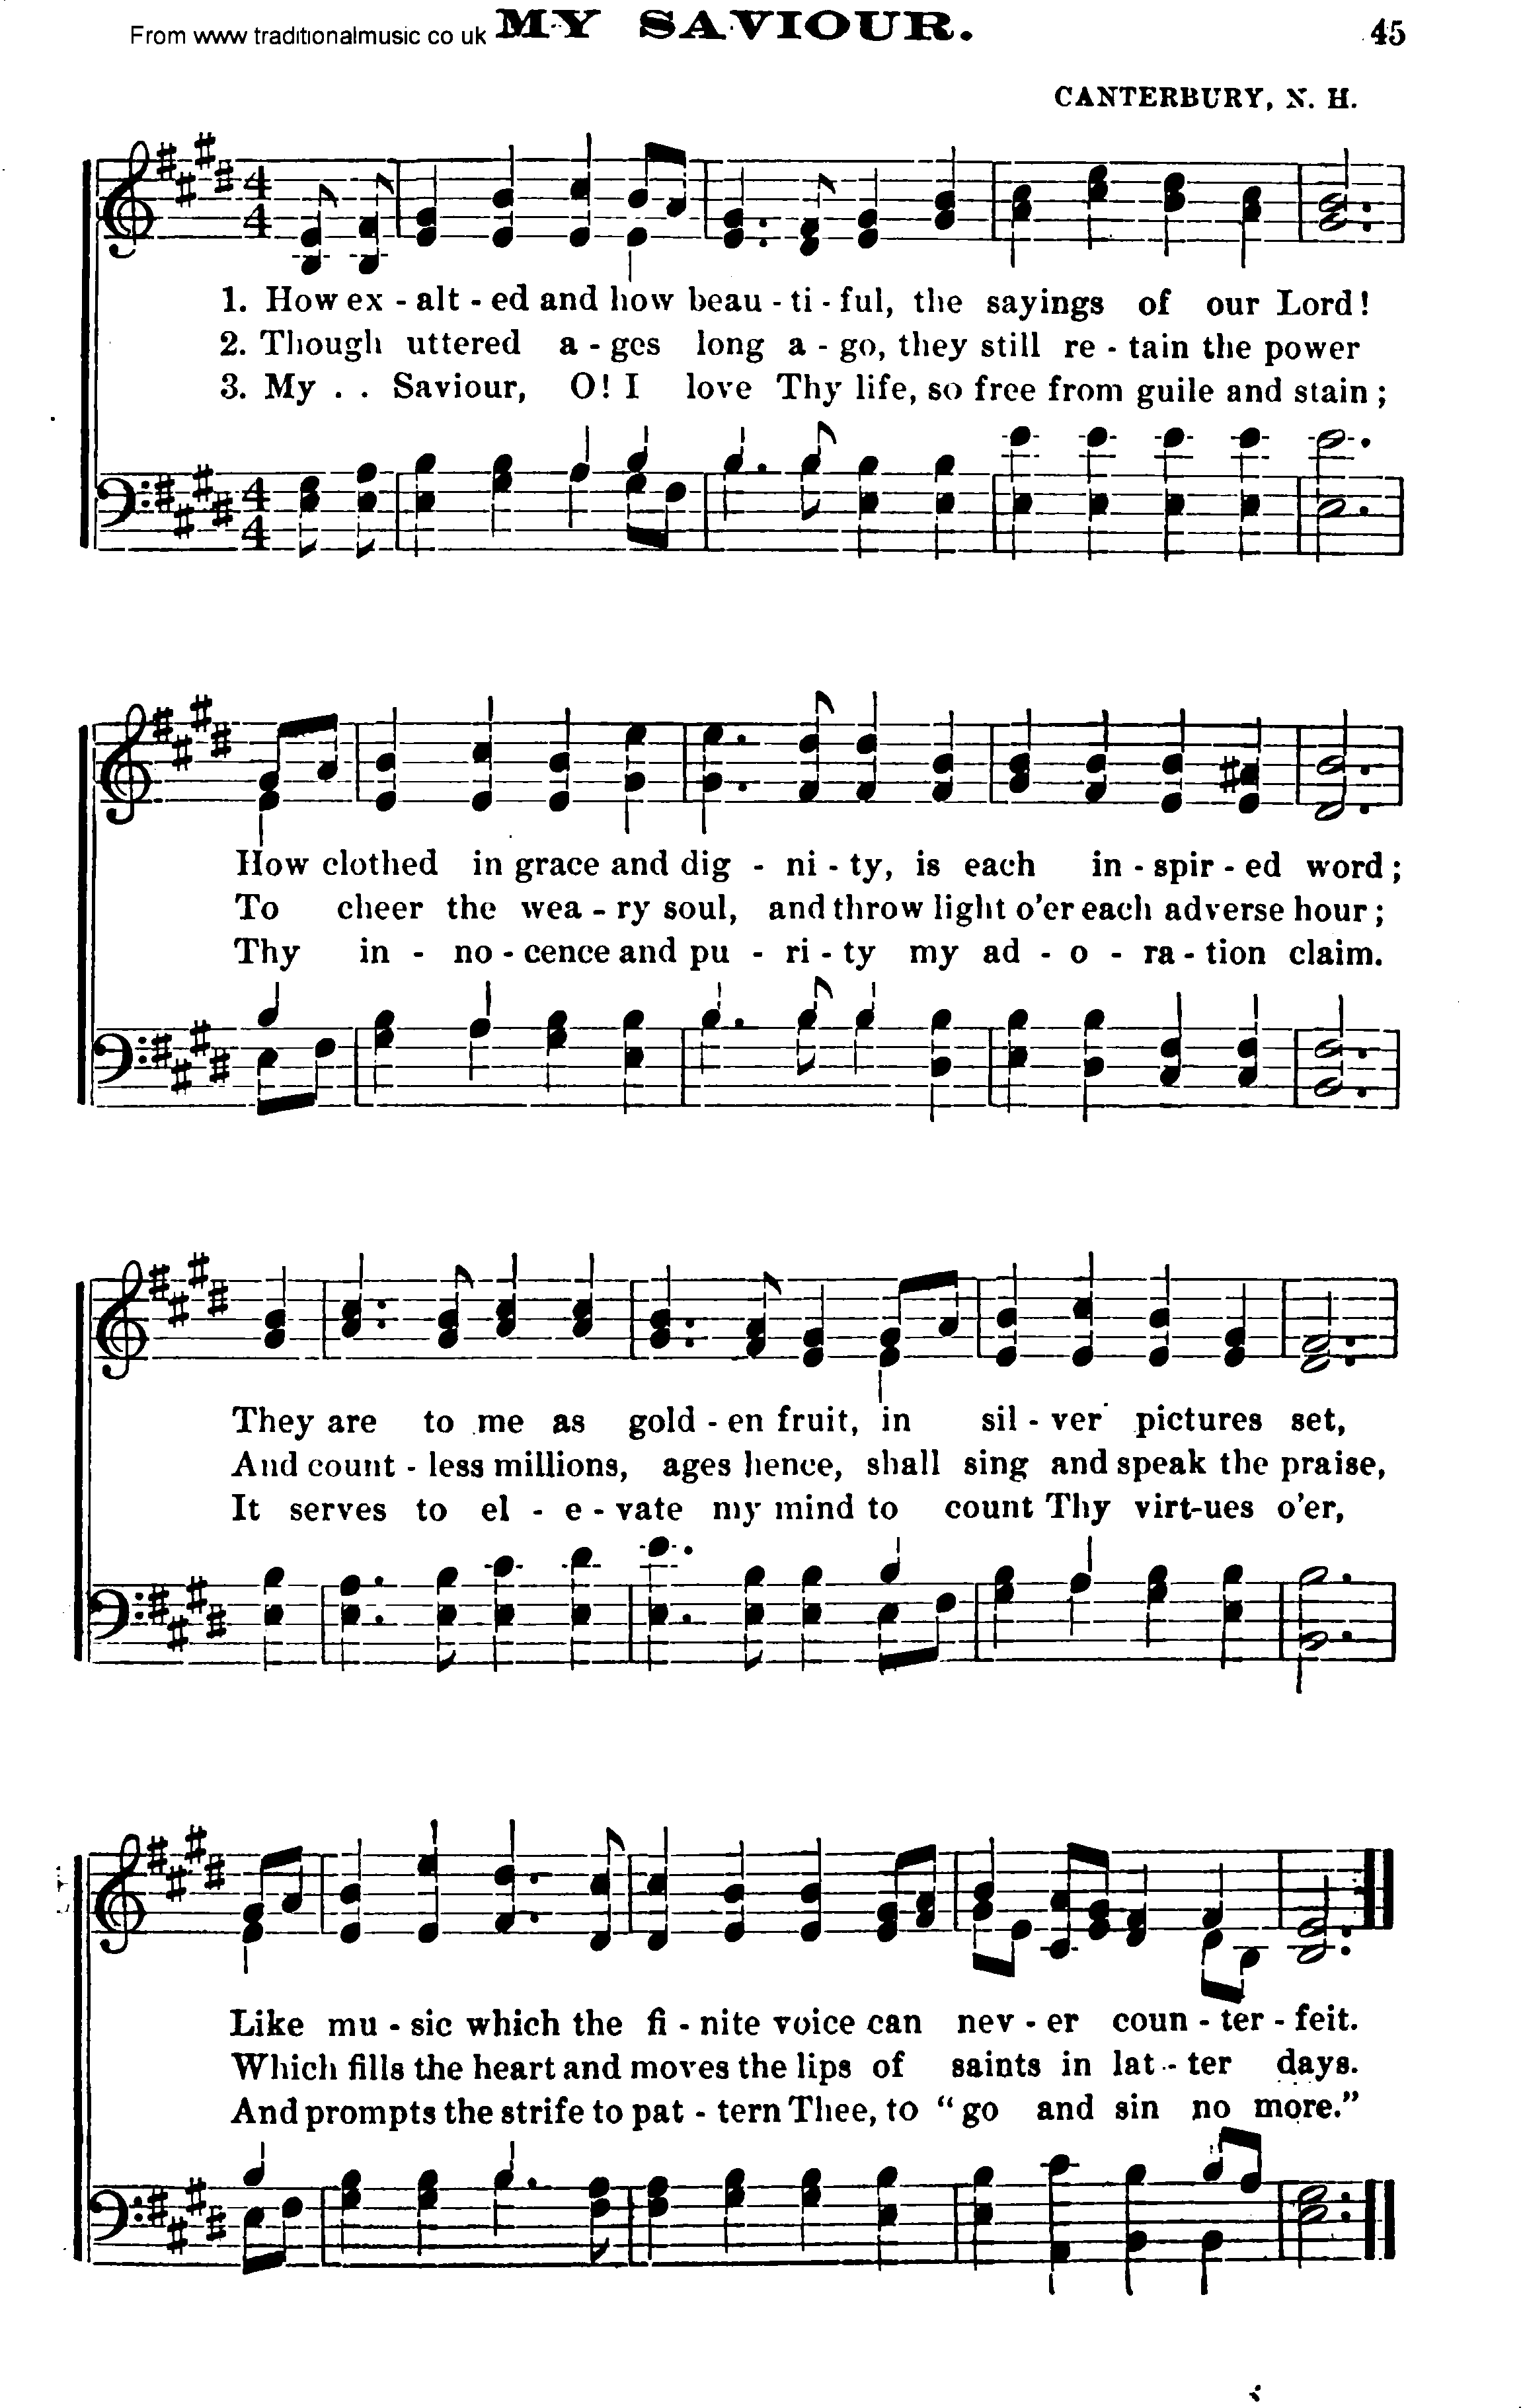 Shaker Music collection, Hymn: My Saviour, sheetmusic and PDF